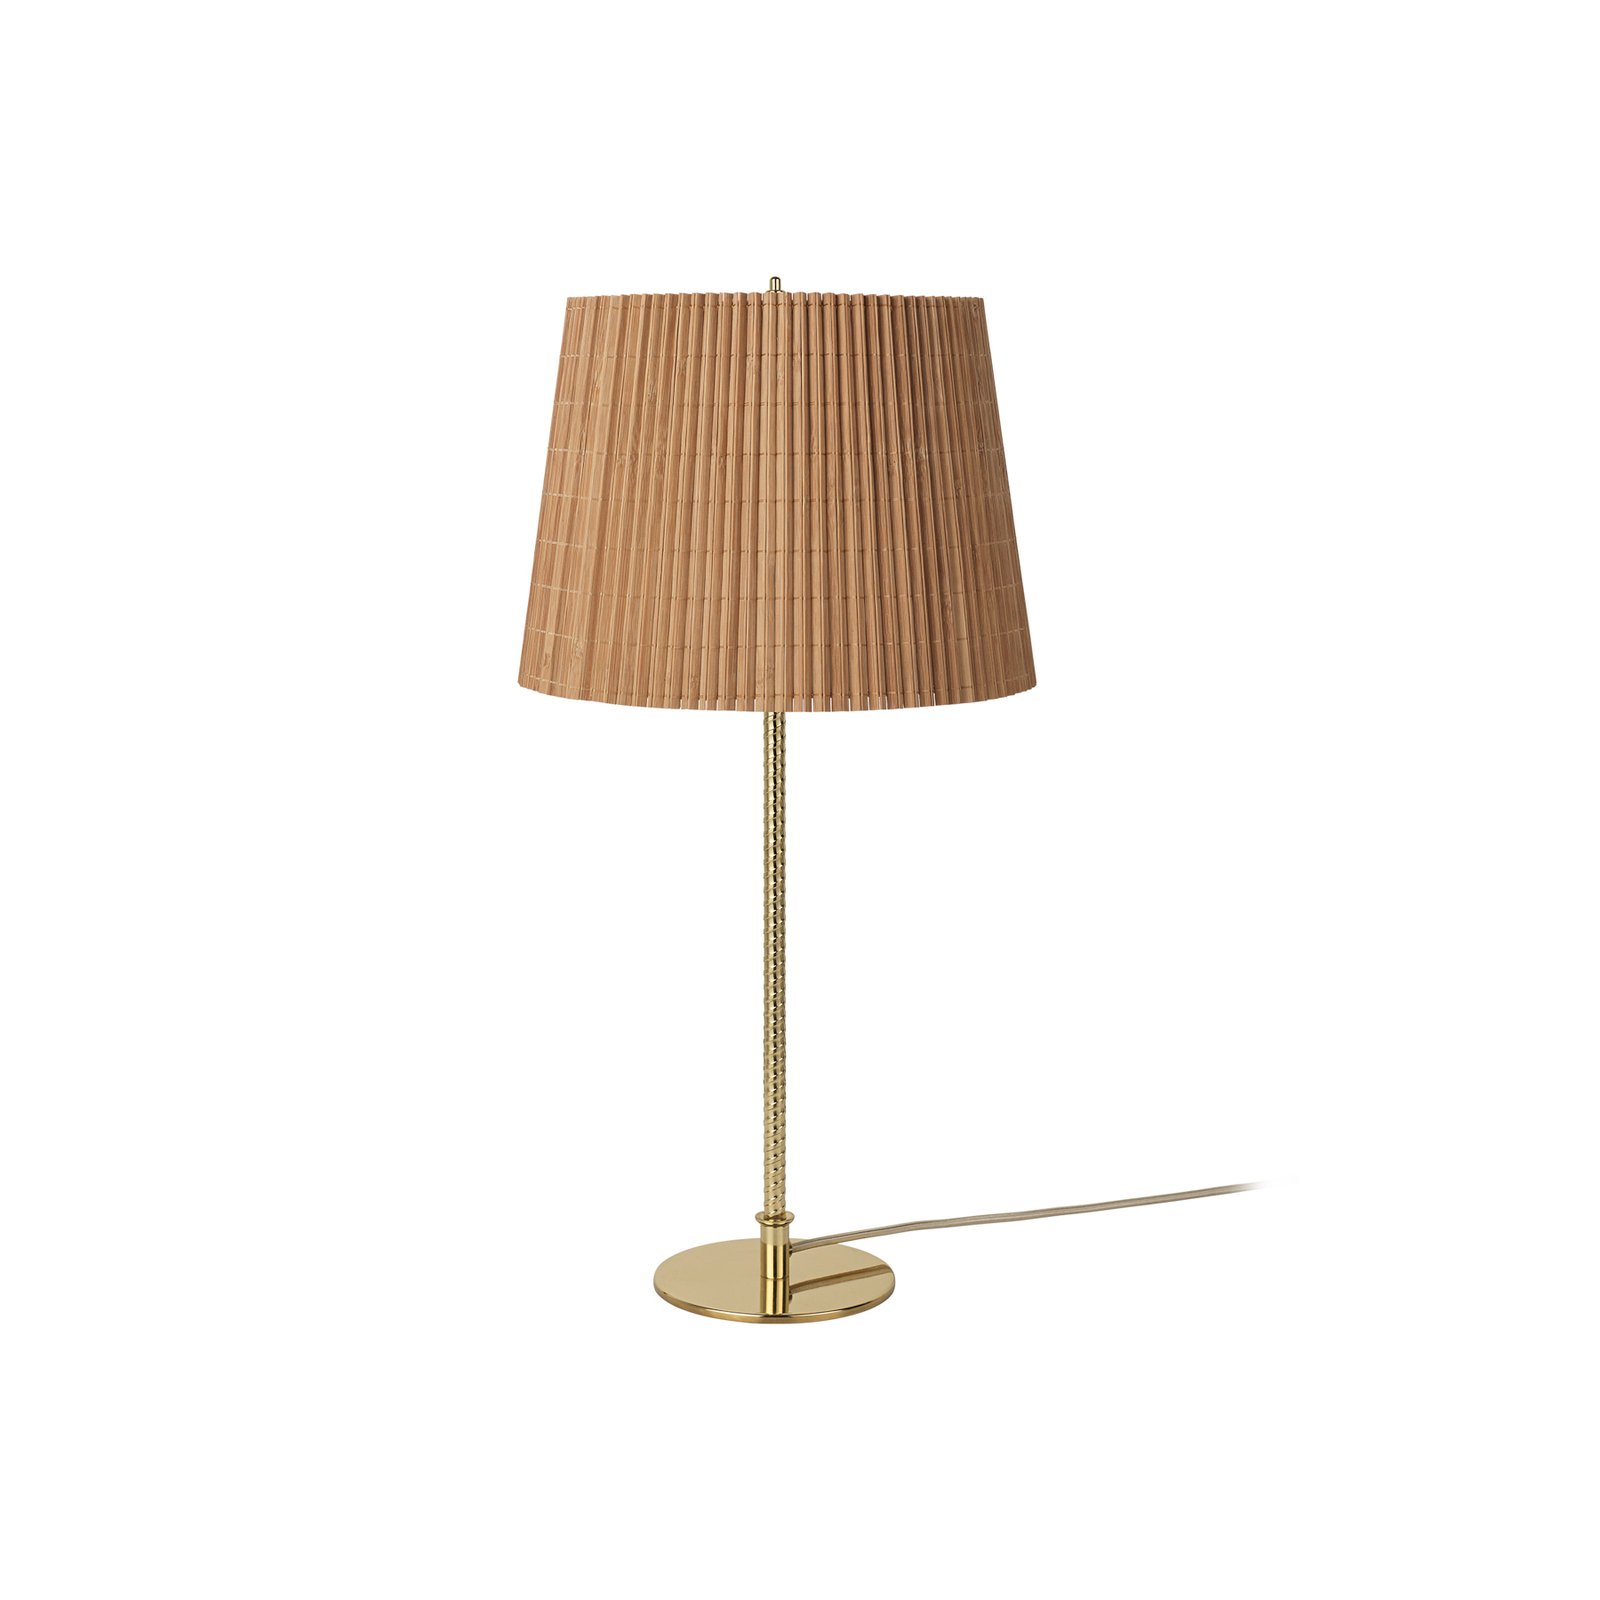 Lampada da tavolo Gubi 9205, ottone, paralume in bambù, altezza 58 cm